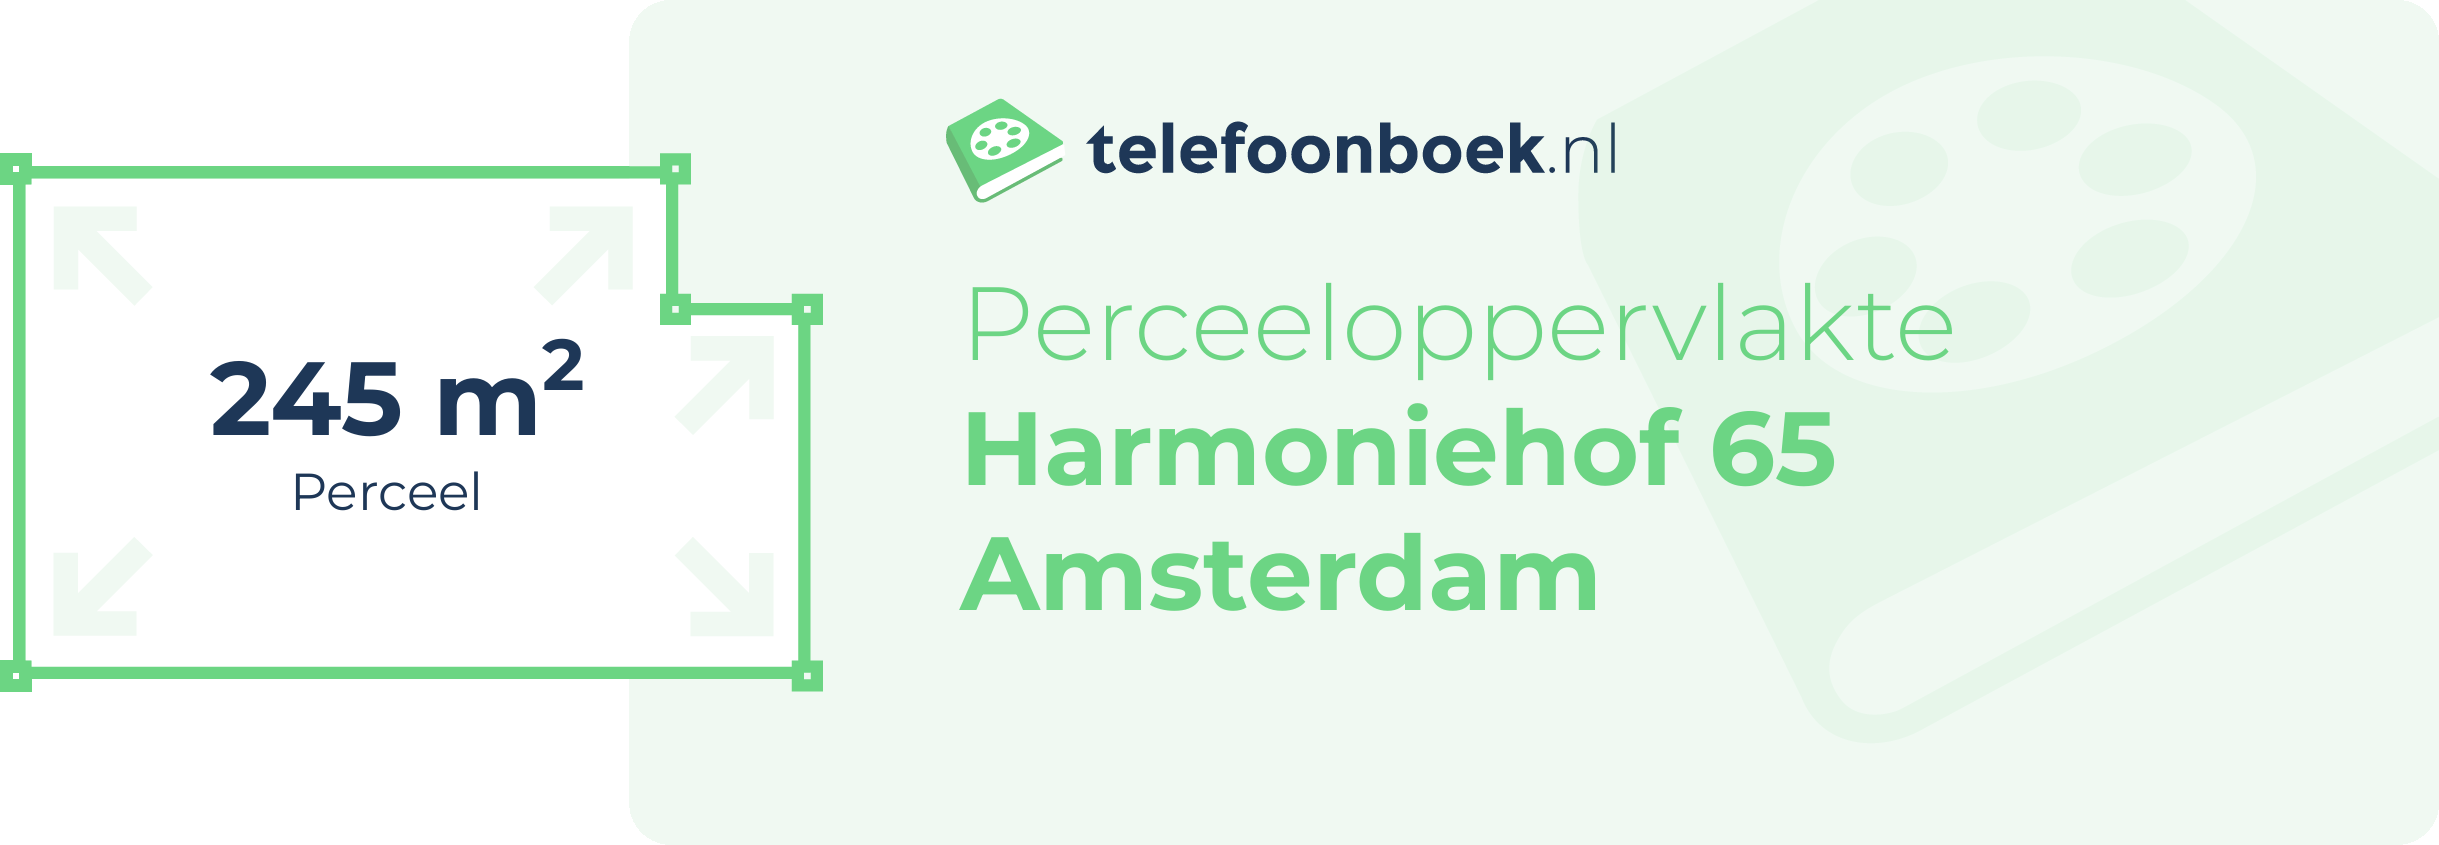 Perceeloppervlakte Harmoniehof 65 Amsterdam